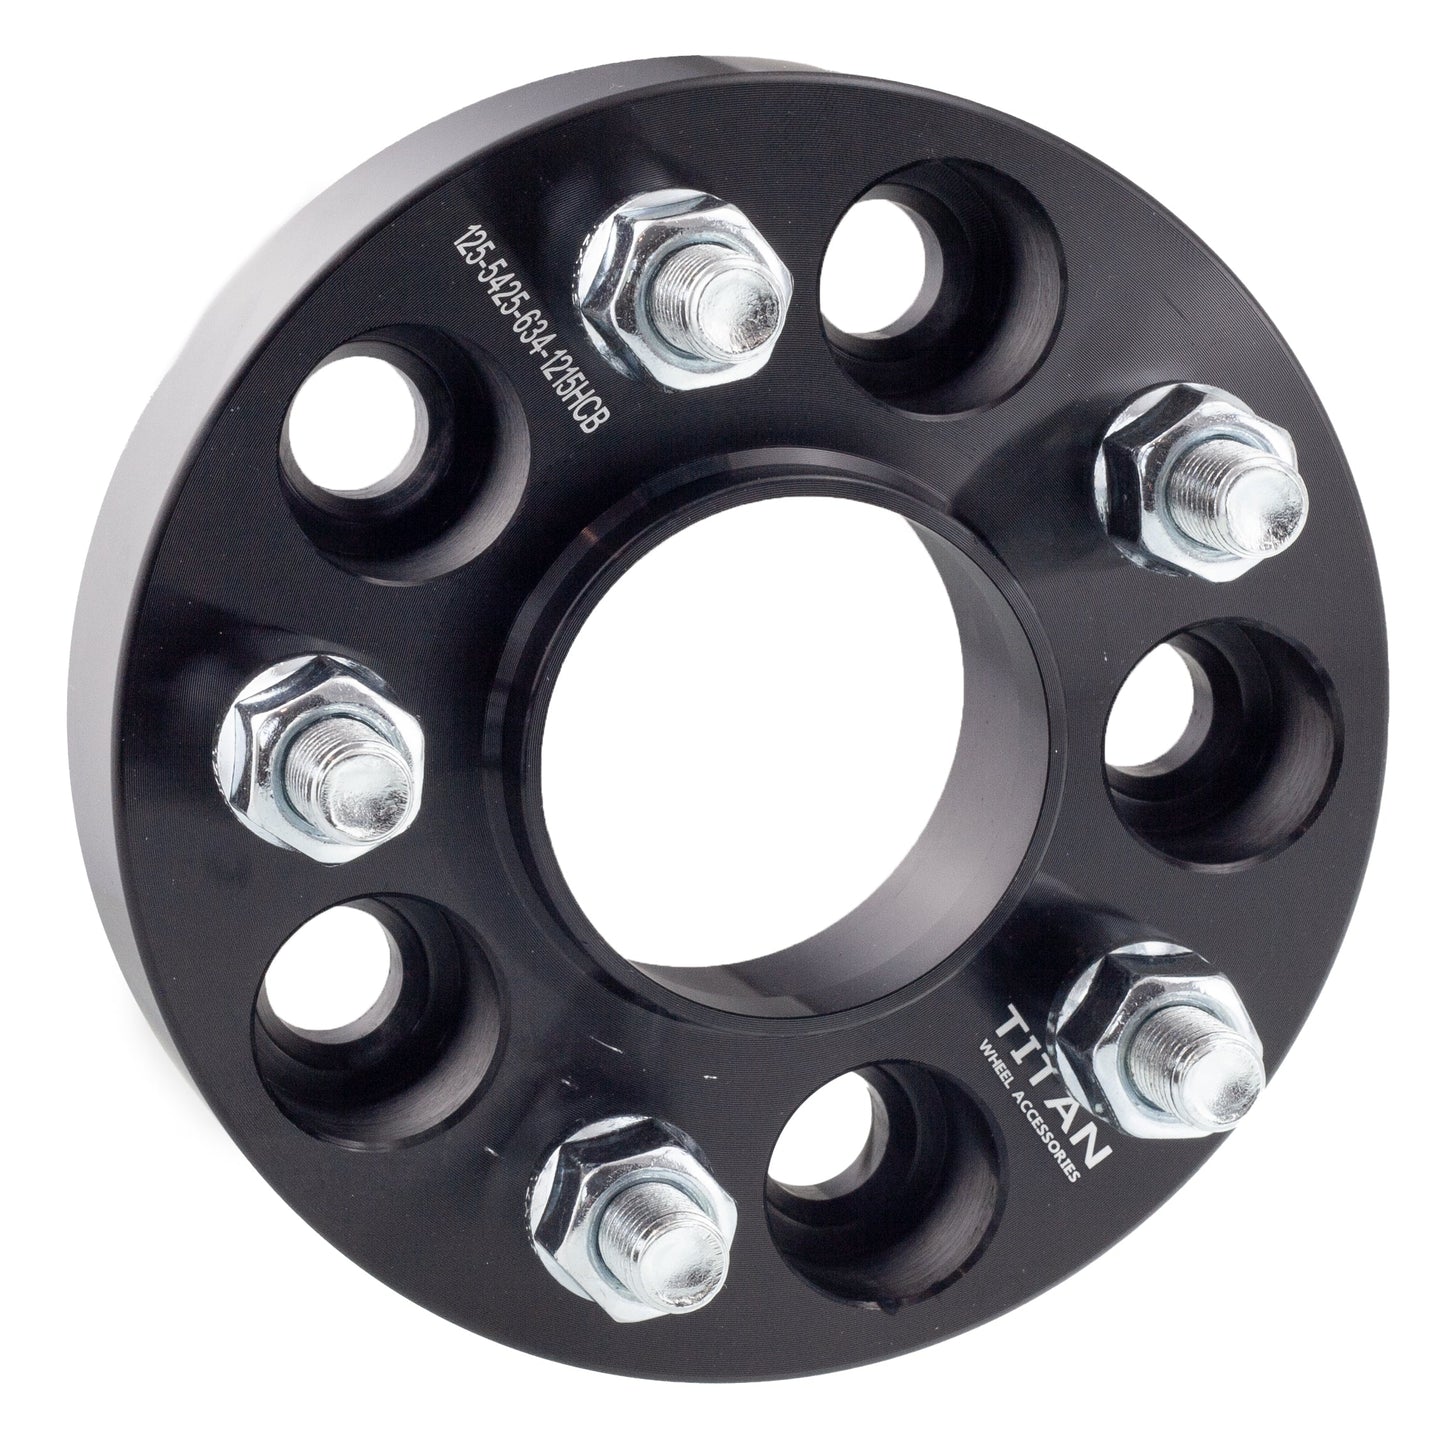 1.25" (32mm) Titan Wheel Spacers for Volvo C30 C70 S40 V50 | 5x4.25 (5x108) | 63.4 Hubcentric | 12x1.5 Studs | Titan Wheel Accessories